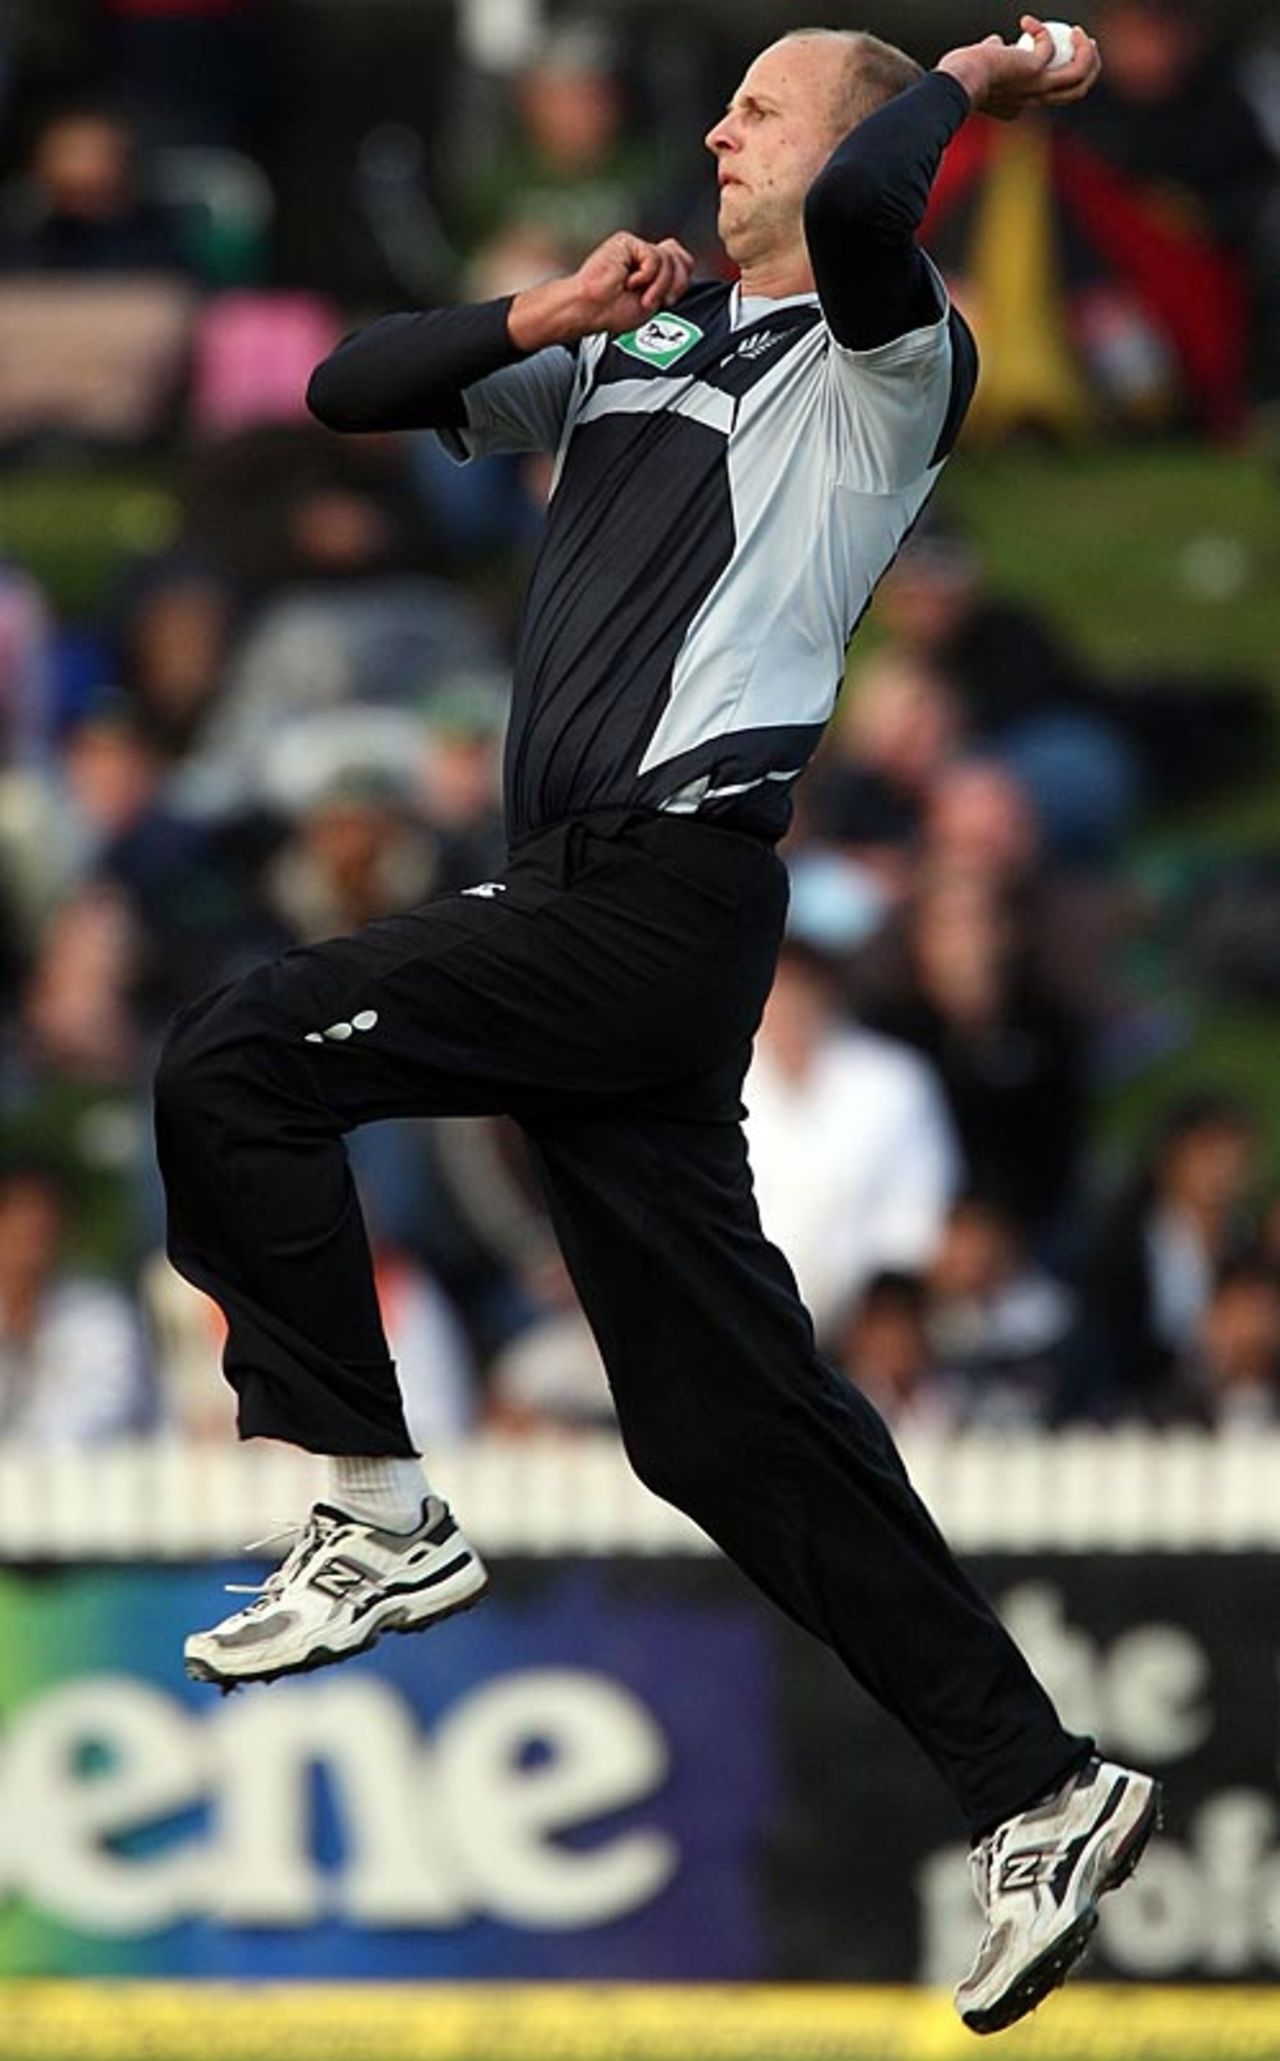 Ewen Thompson bowls on debut, New Zealand v India, 4th ODI, Hamilton, March 11, 2009